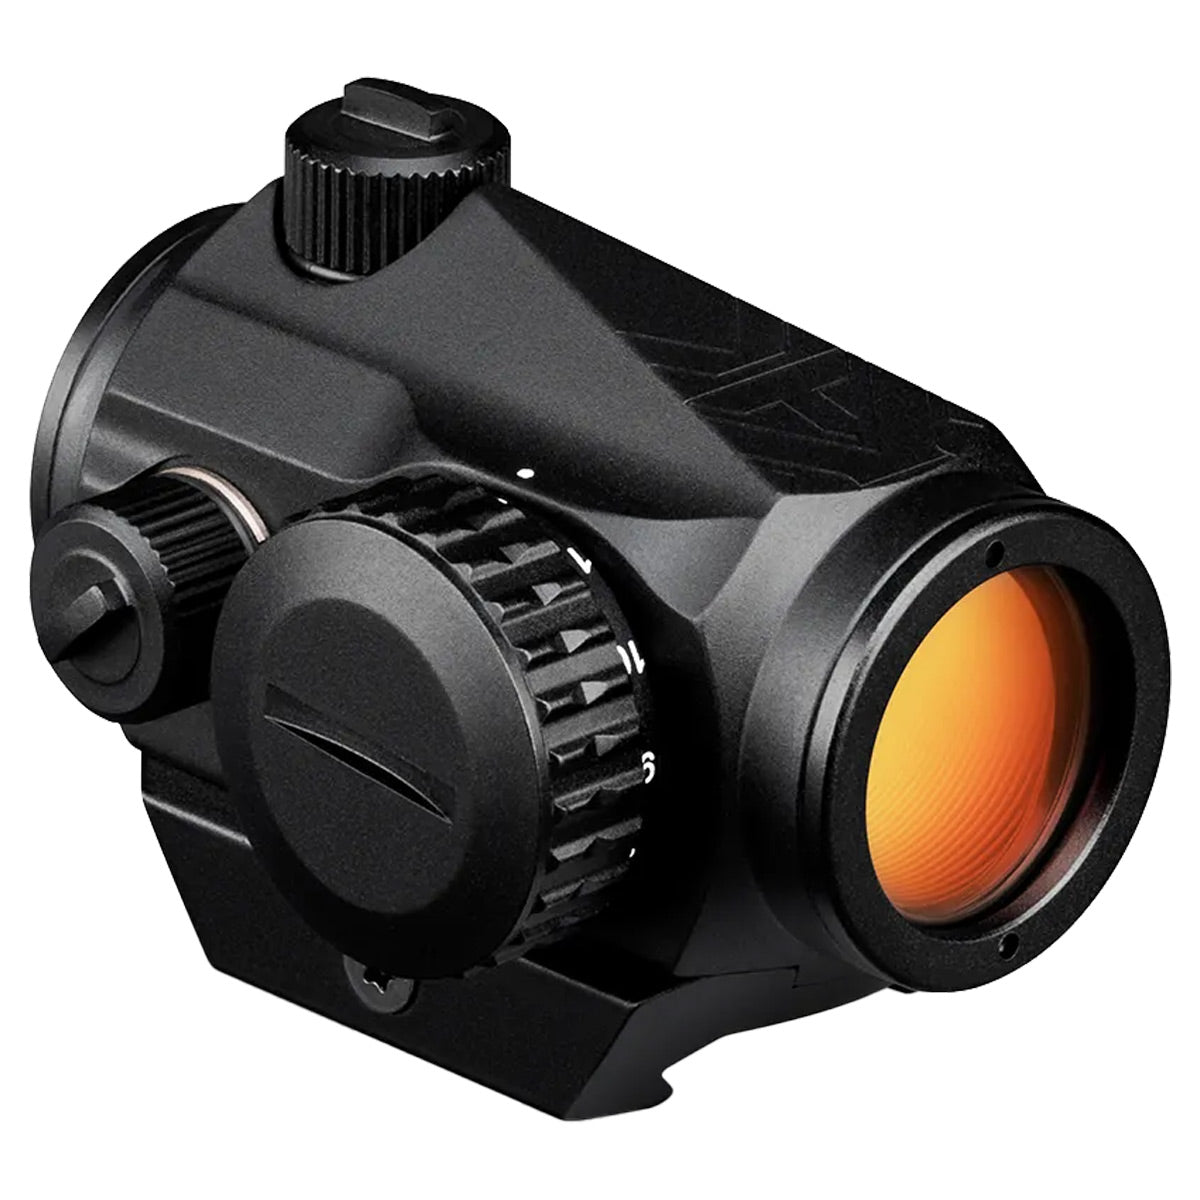 Vortex Crossfire II 2 MOA Red Dot Sight in  by GOHUNT | Vortex Optics - GOHUNT Shop